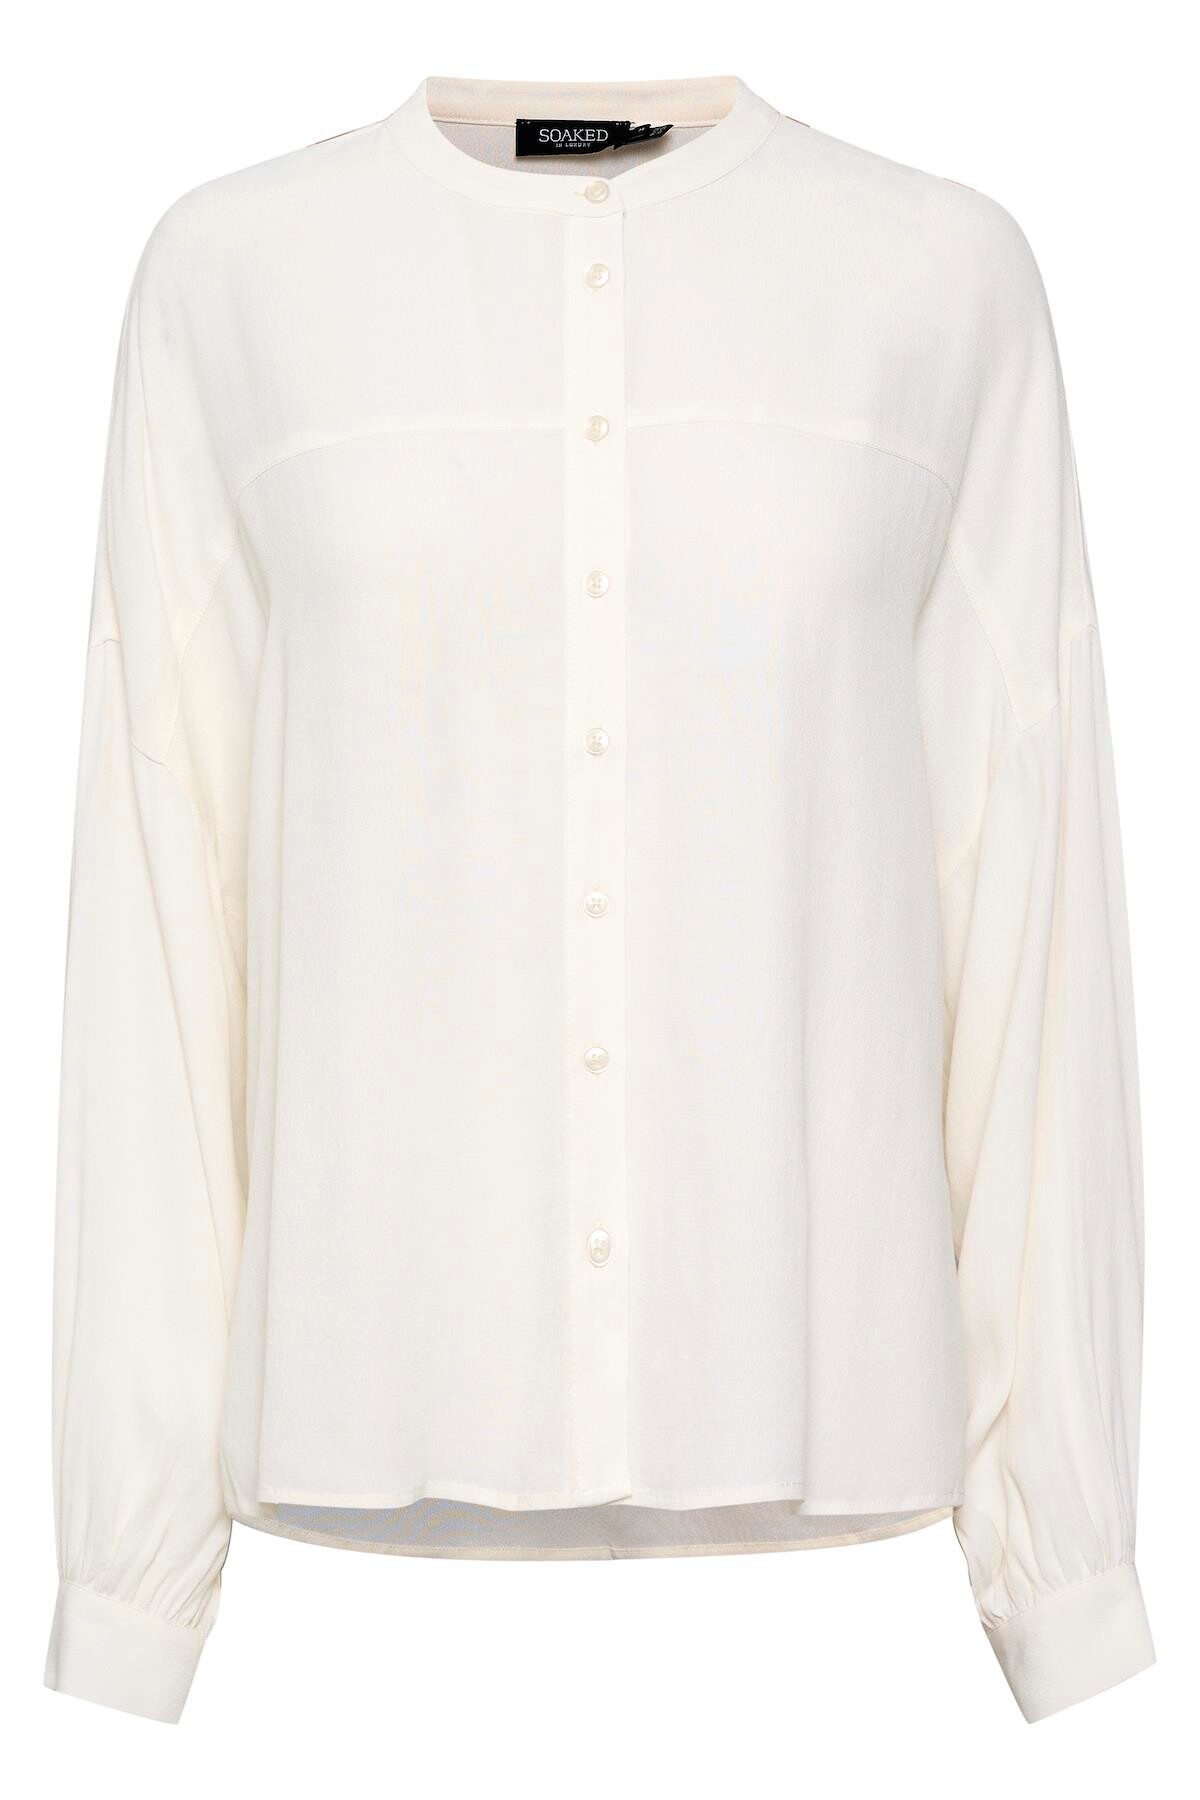 Soaked In Luxury Slhelia Skjorte, Farve: Hvid, Størrelse: XS, Dame